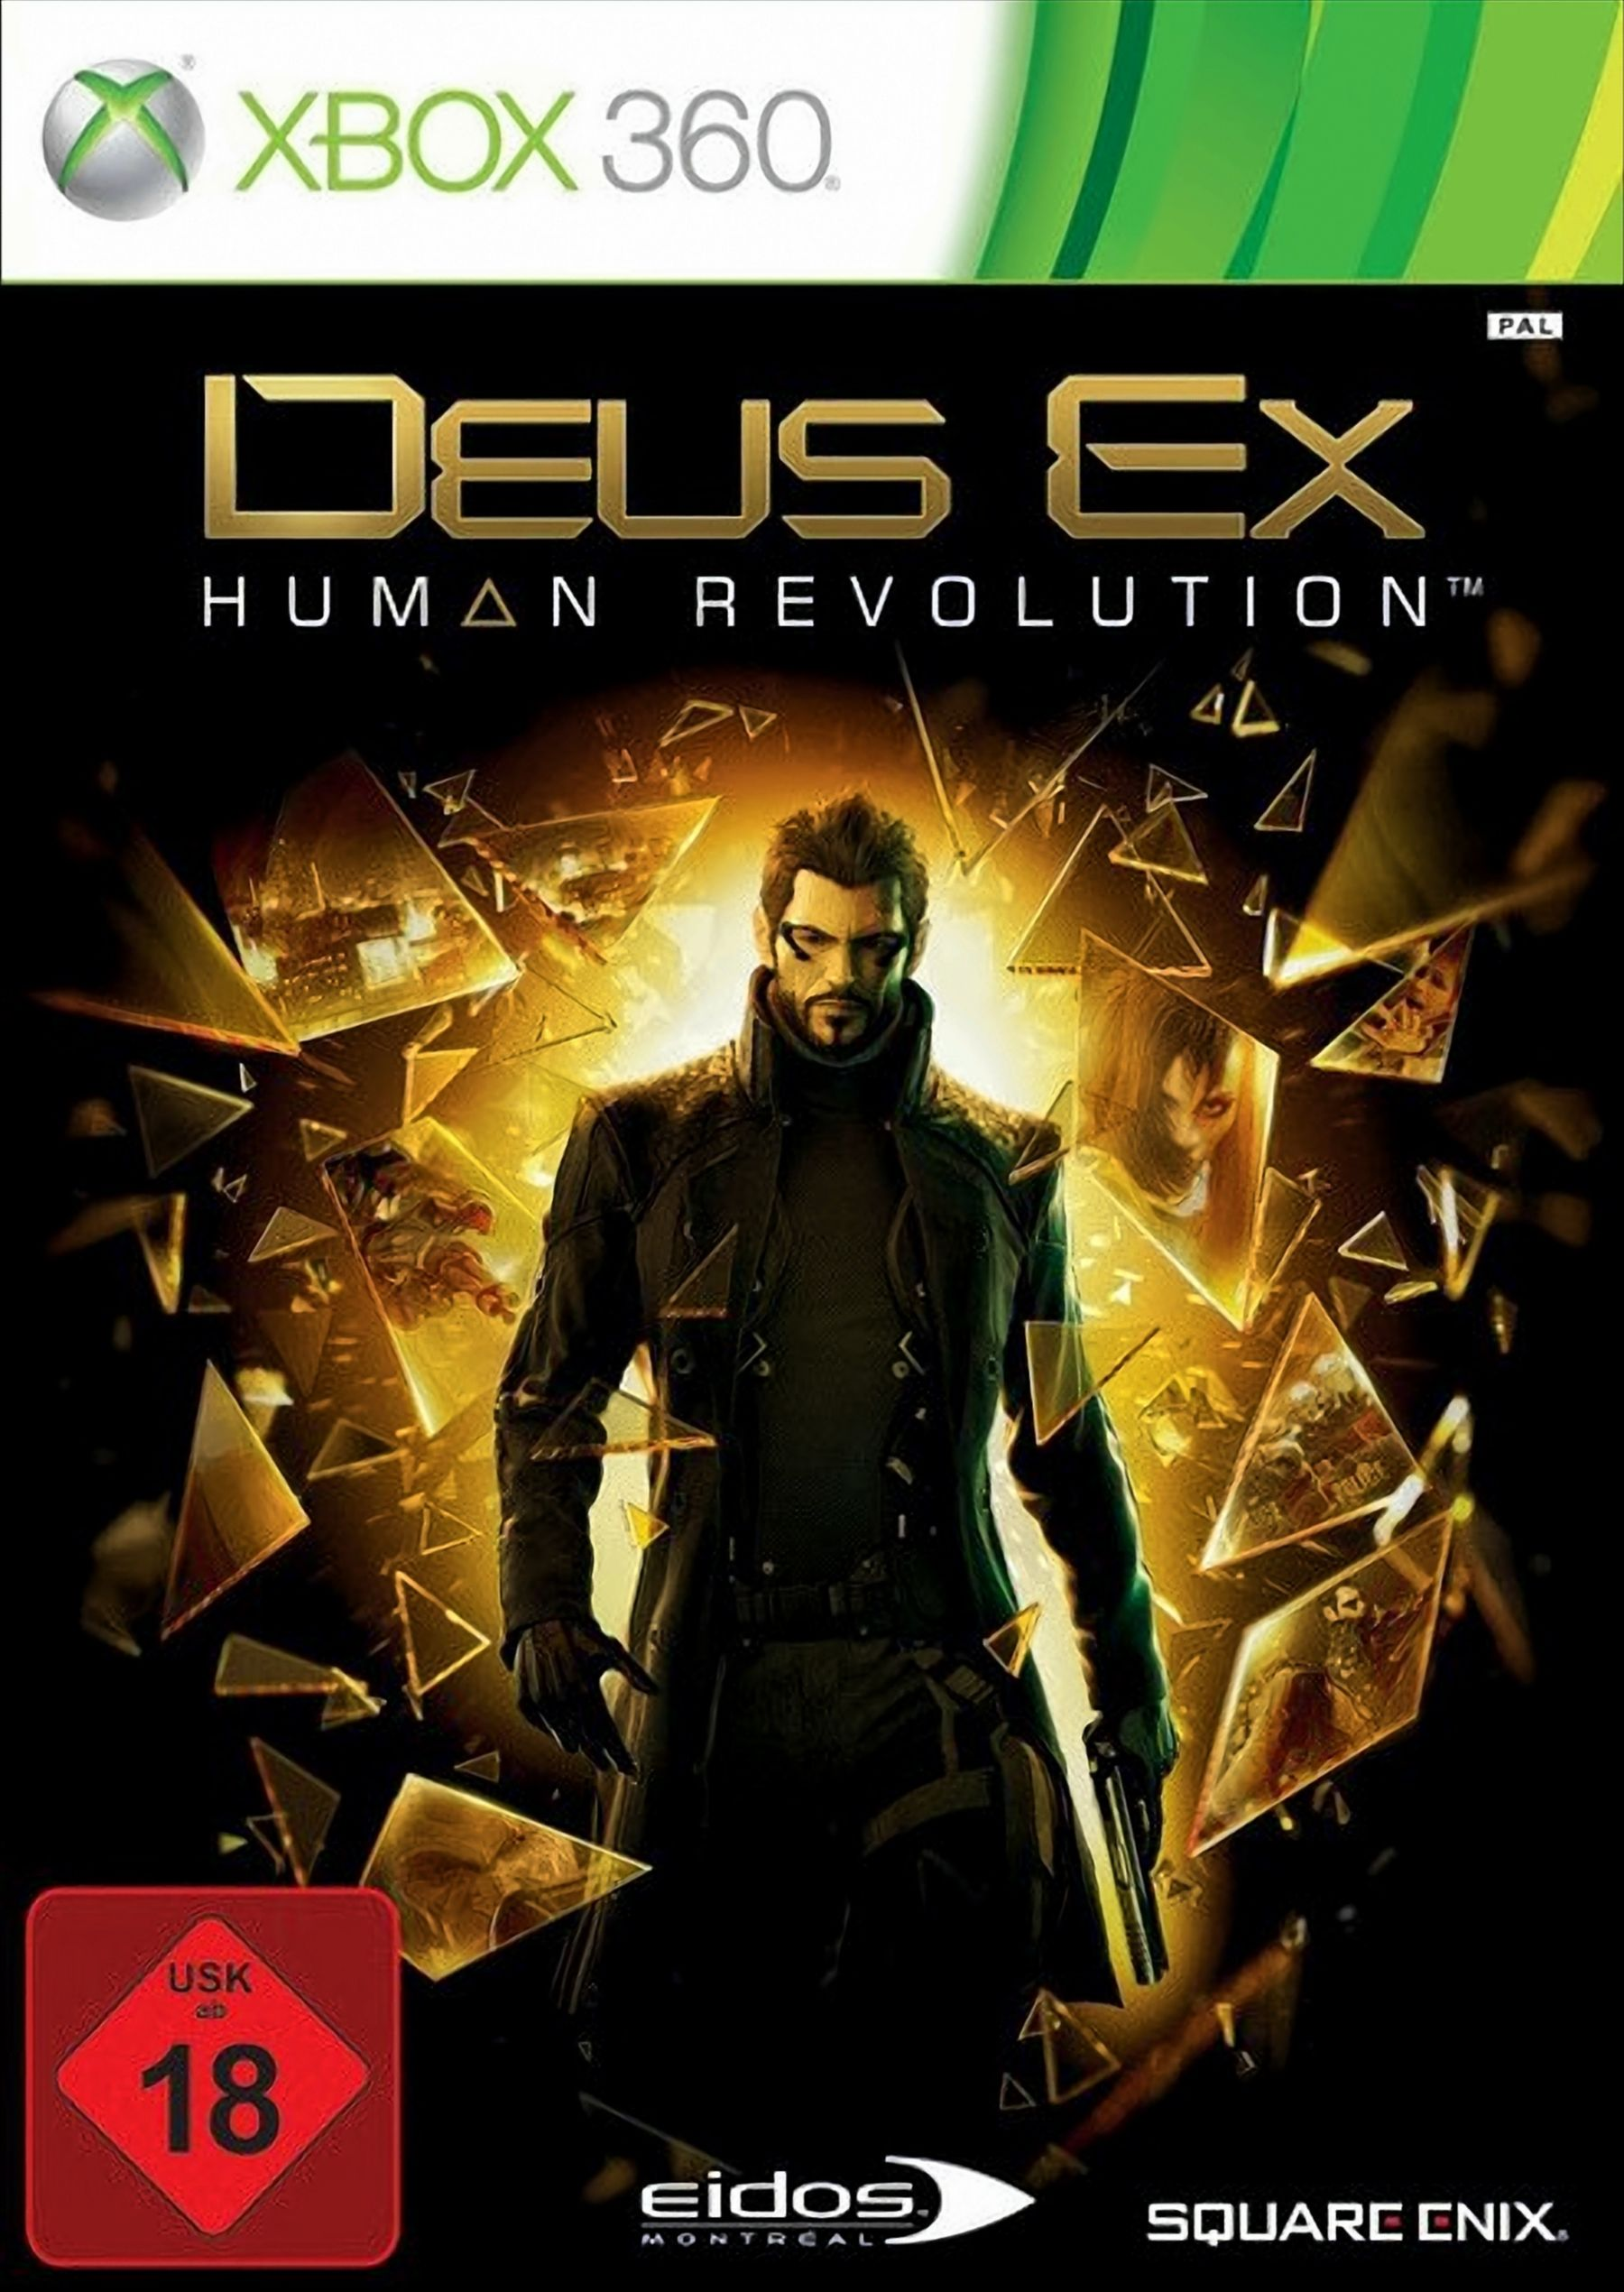 [Xbox - Revolution Human 360] Ex: Deus